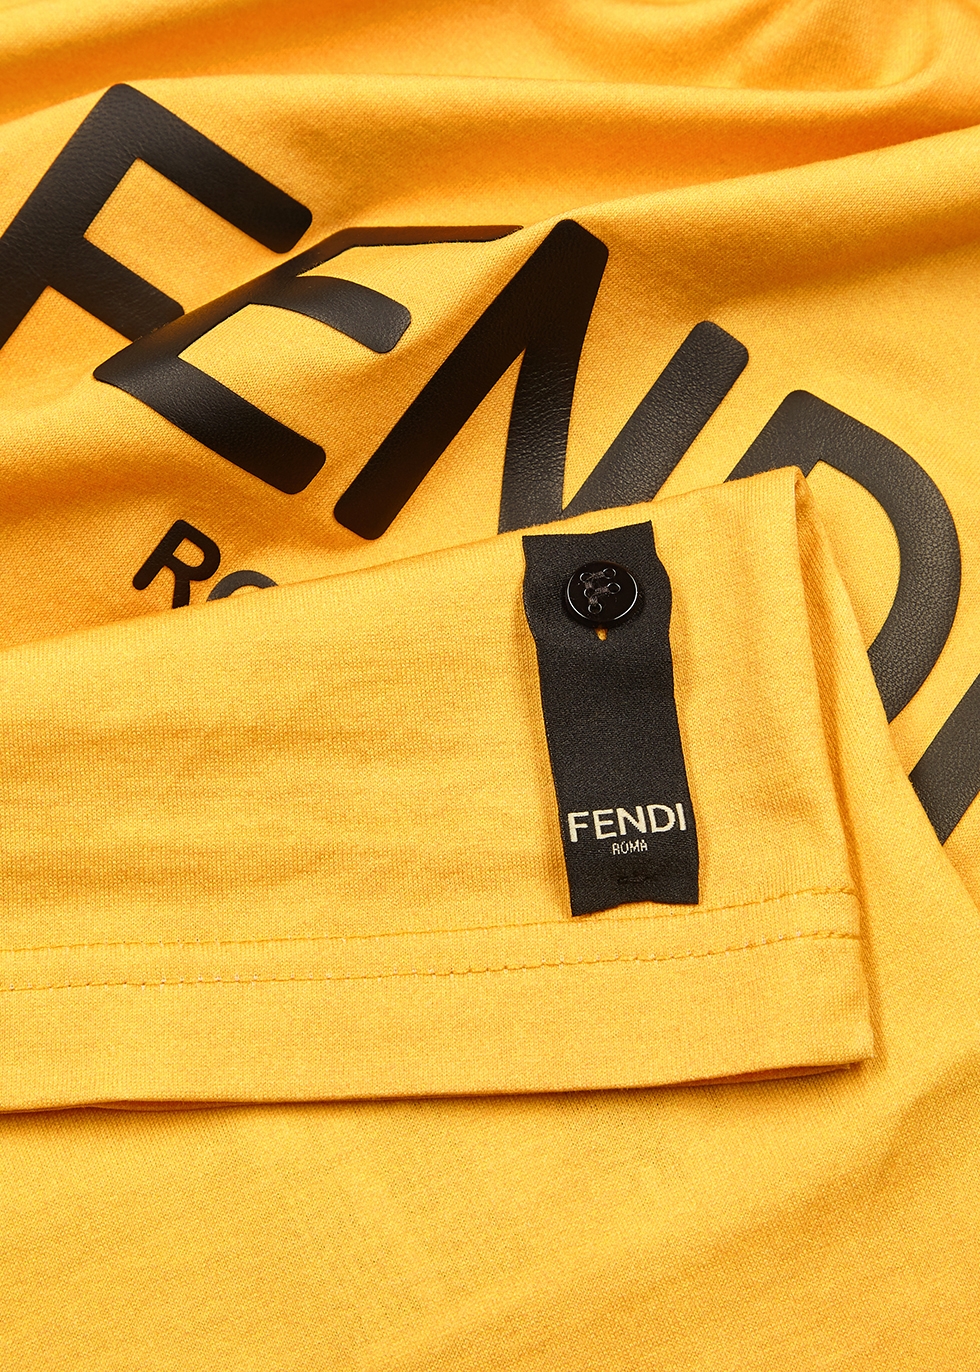 Fendi Yellow logo cotton T-shirt 